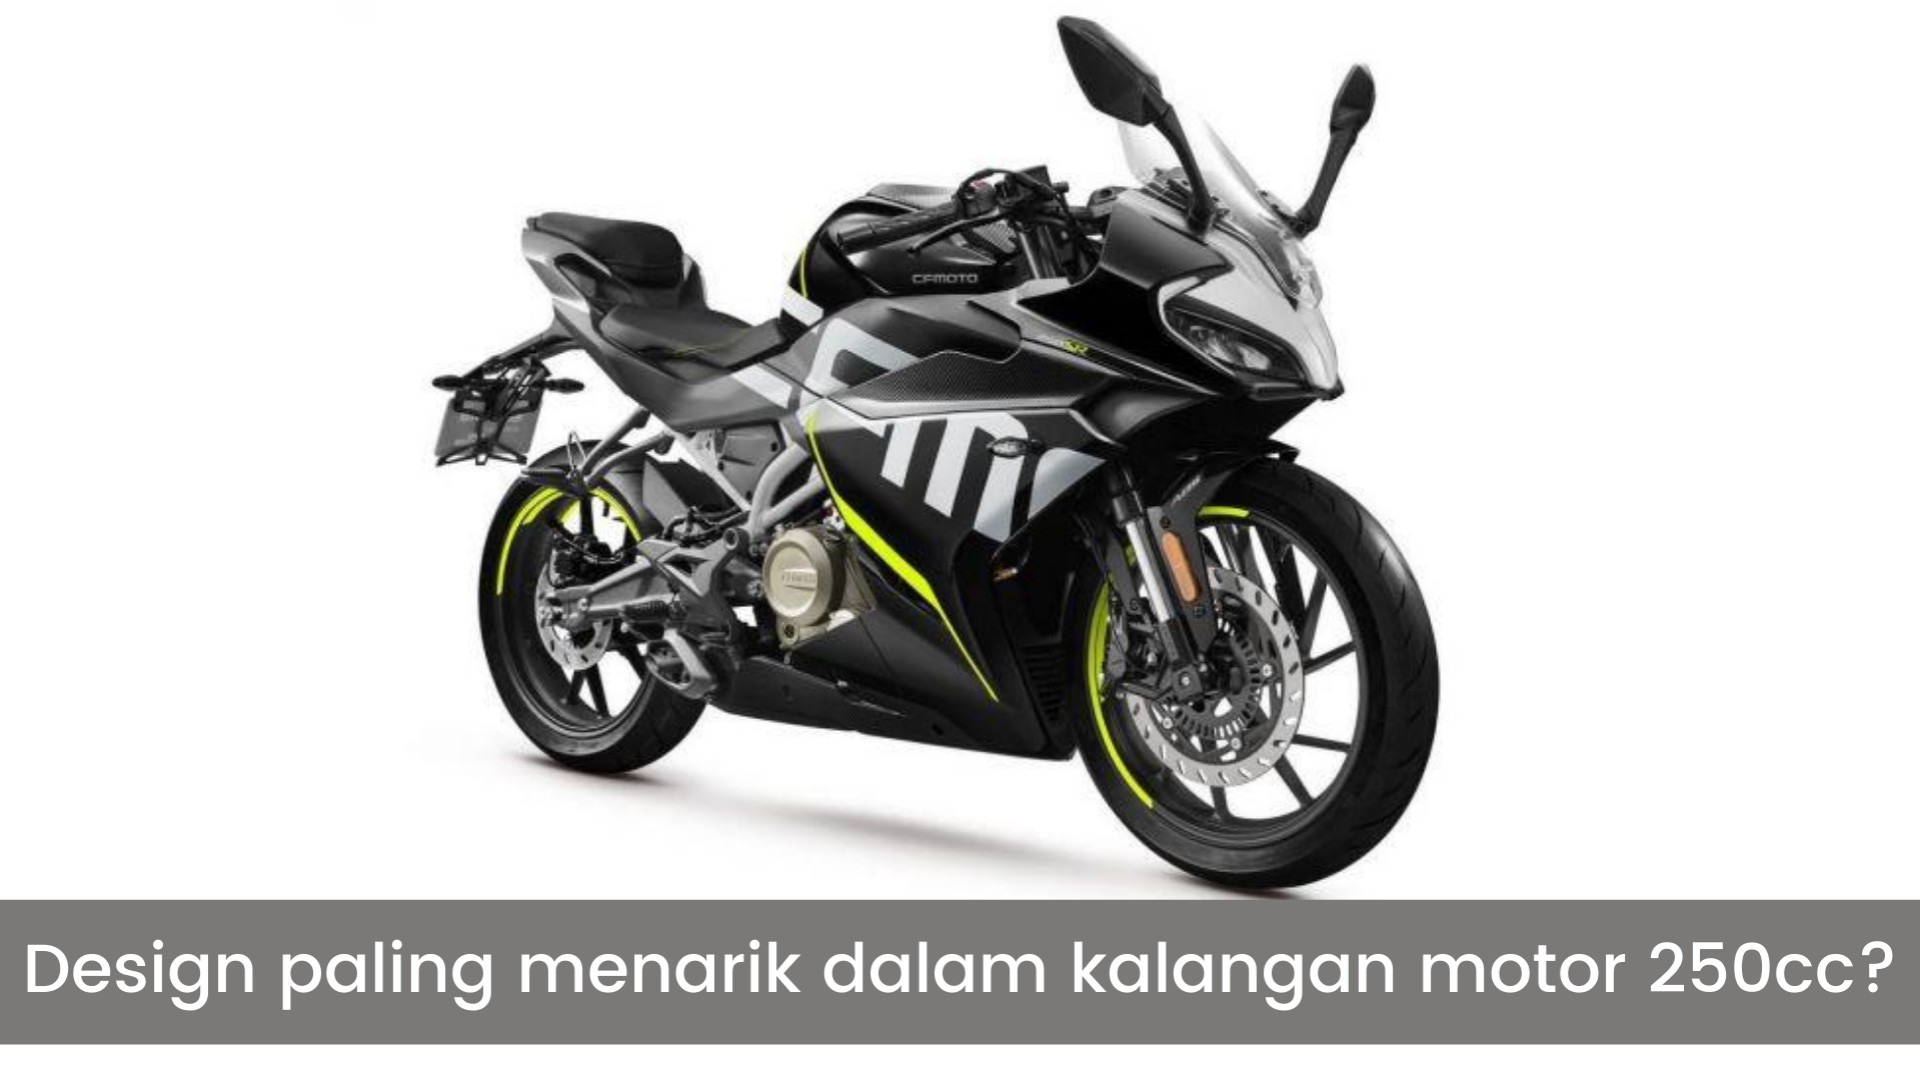 CFMoto 250 Saingan Kepada Kawasaki Ninja 250! Harga RM 15,800 Sahaja Dgn Spec Canggih!